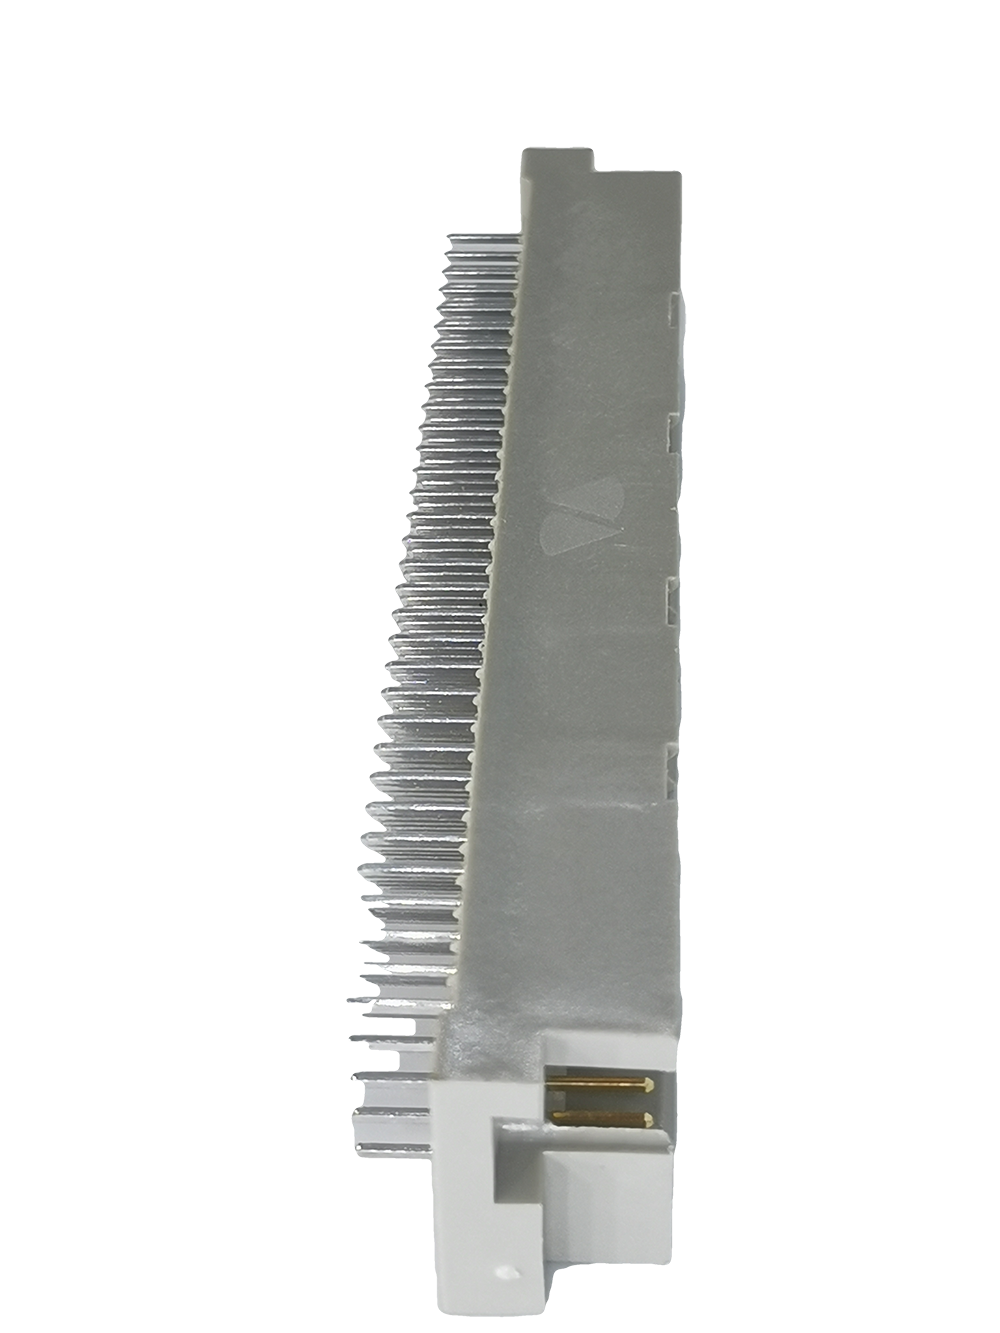 160P Straight Plug type E Solder DIN41612 Connector